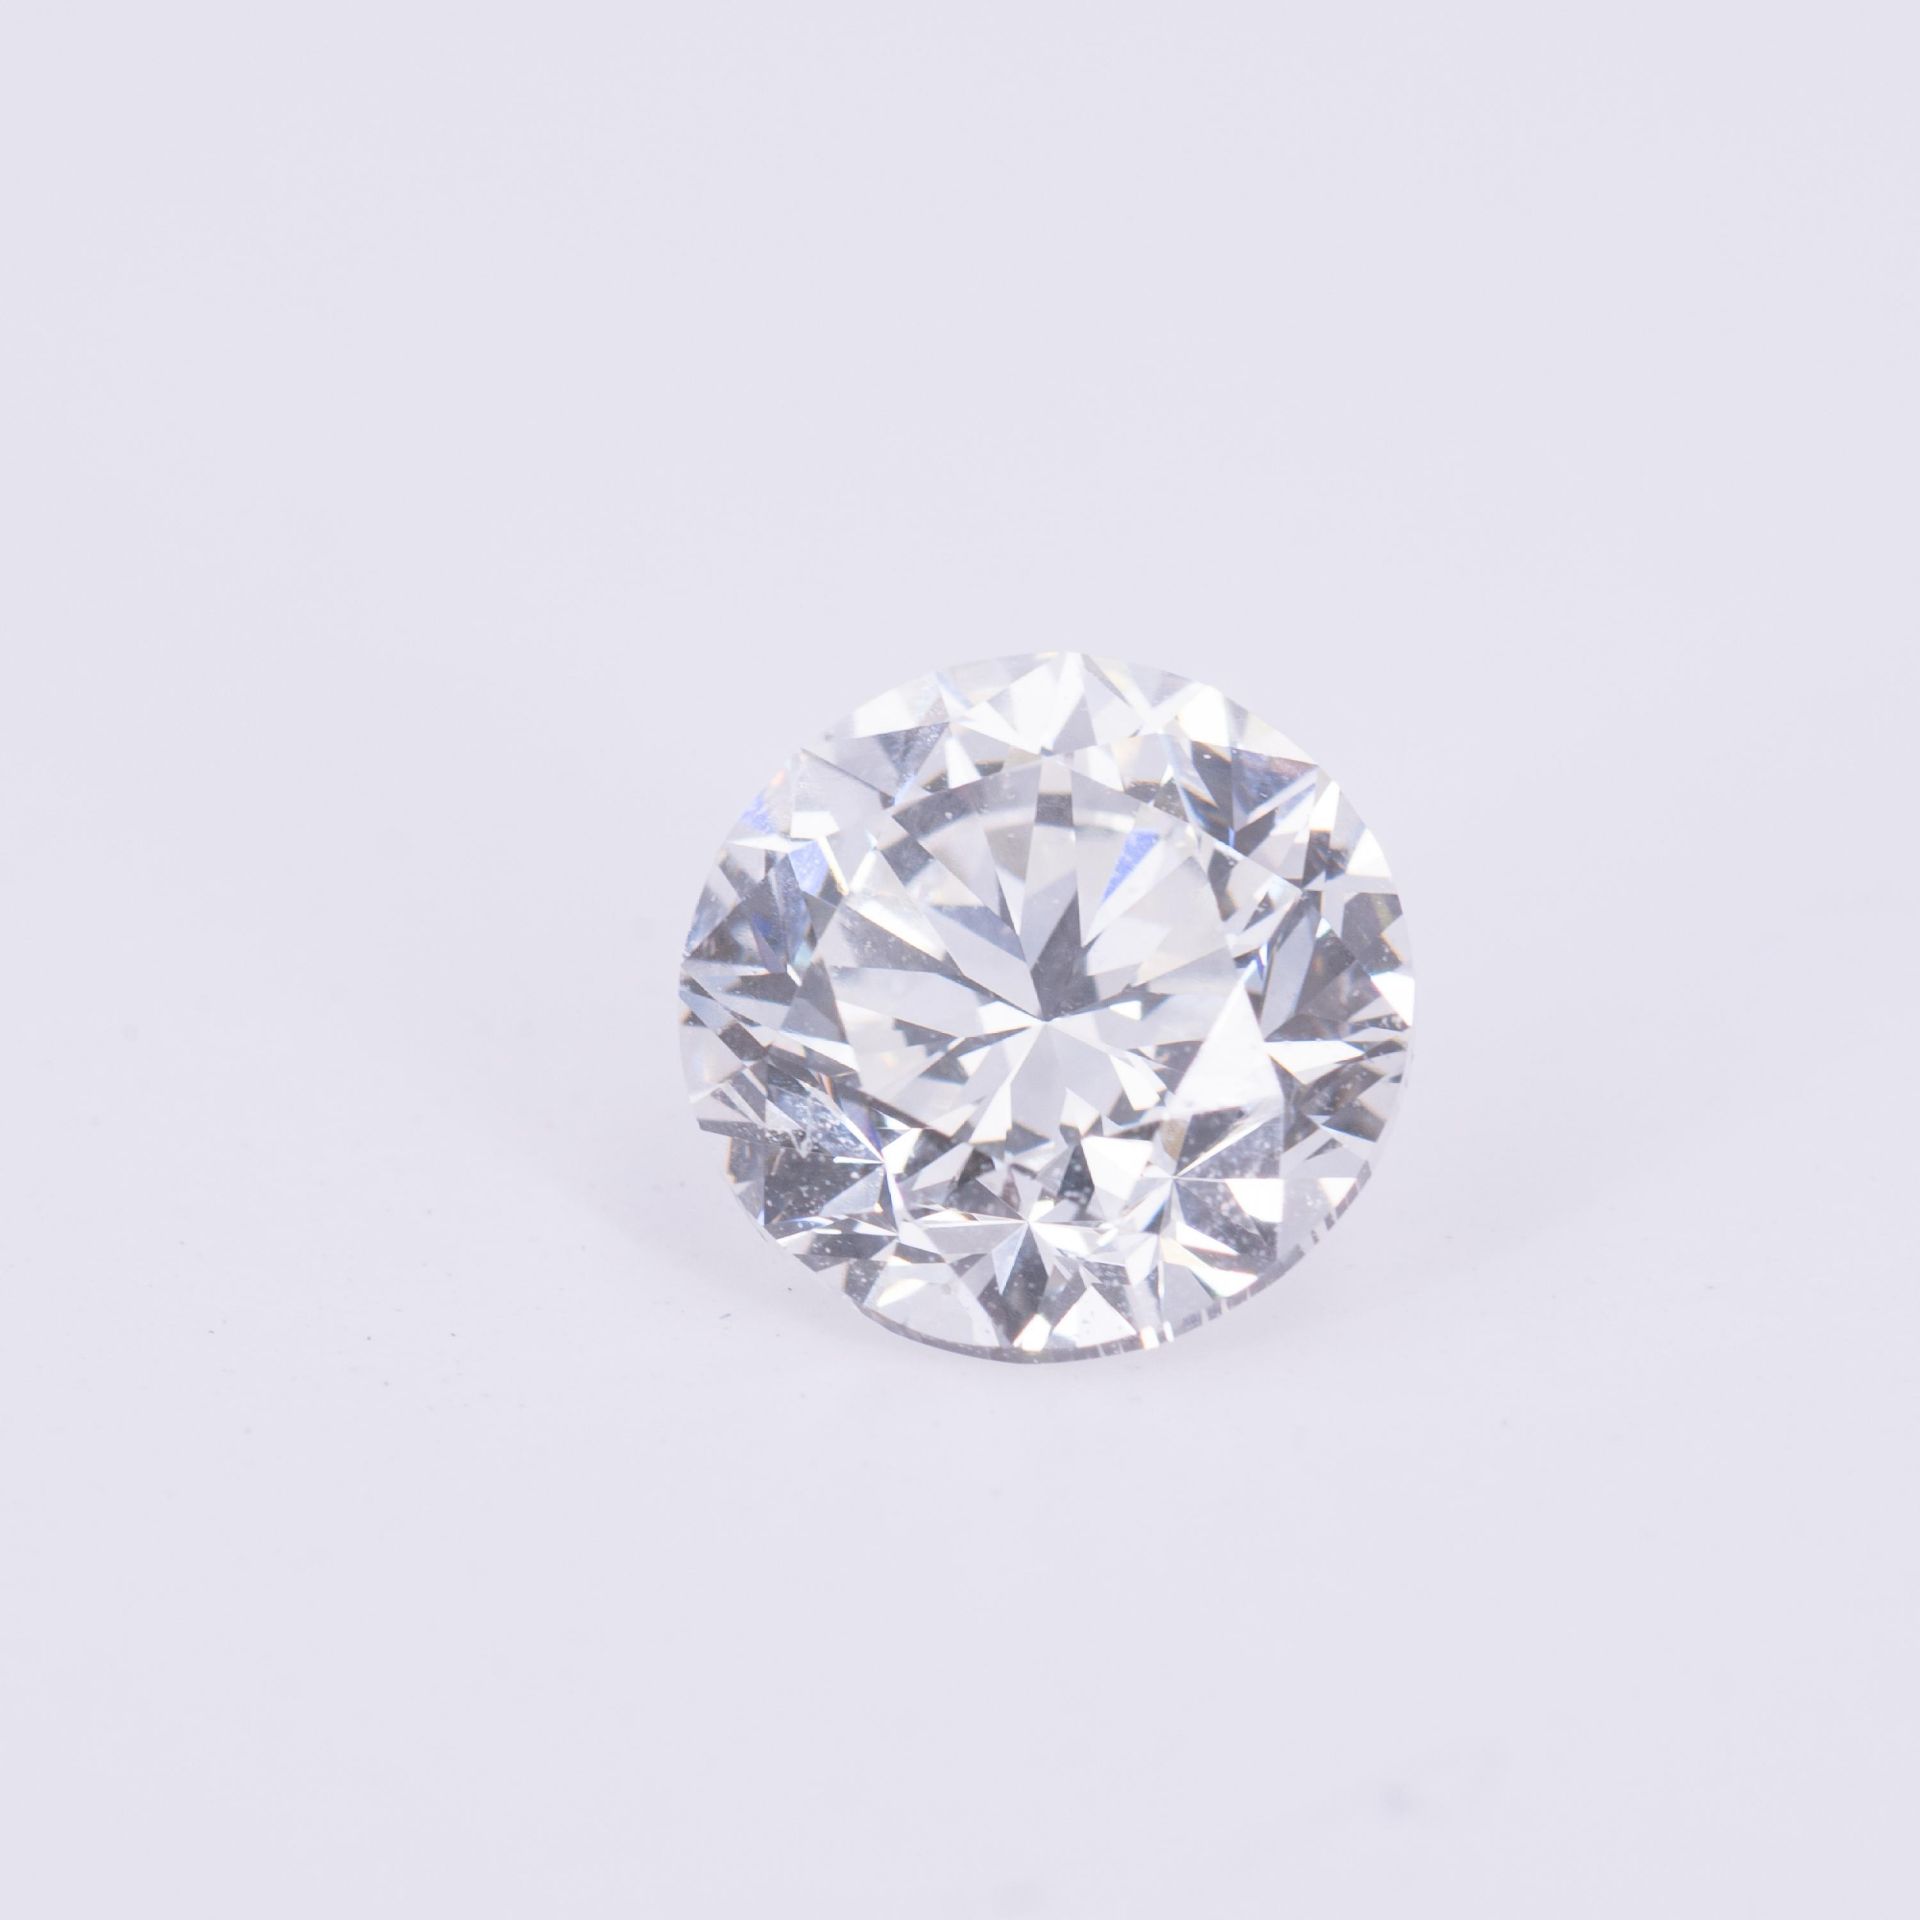 Loose Diamond - Image 2 of 3